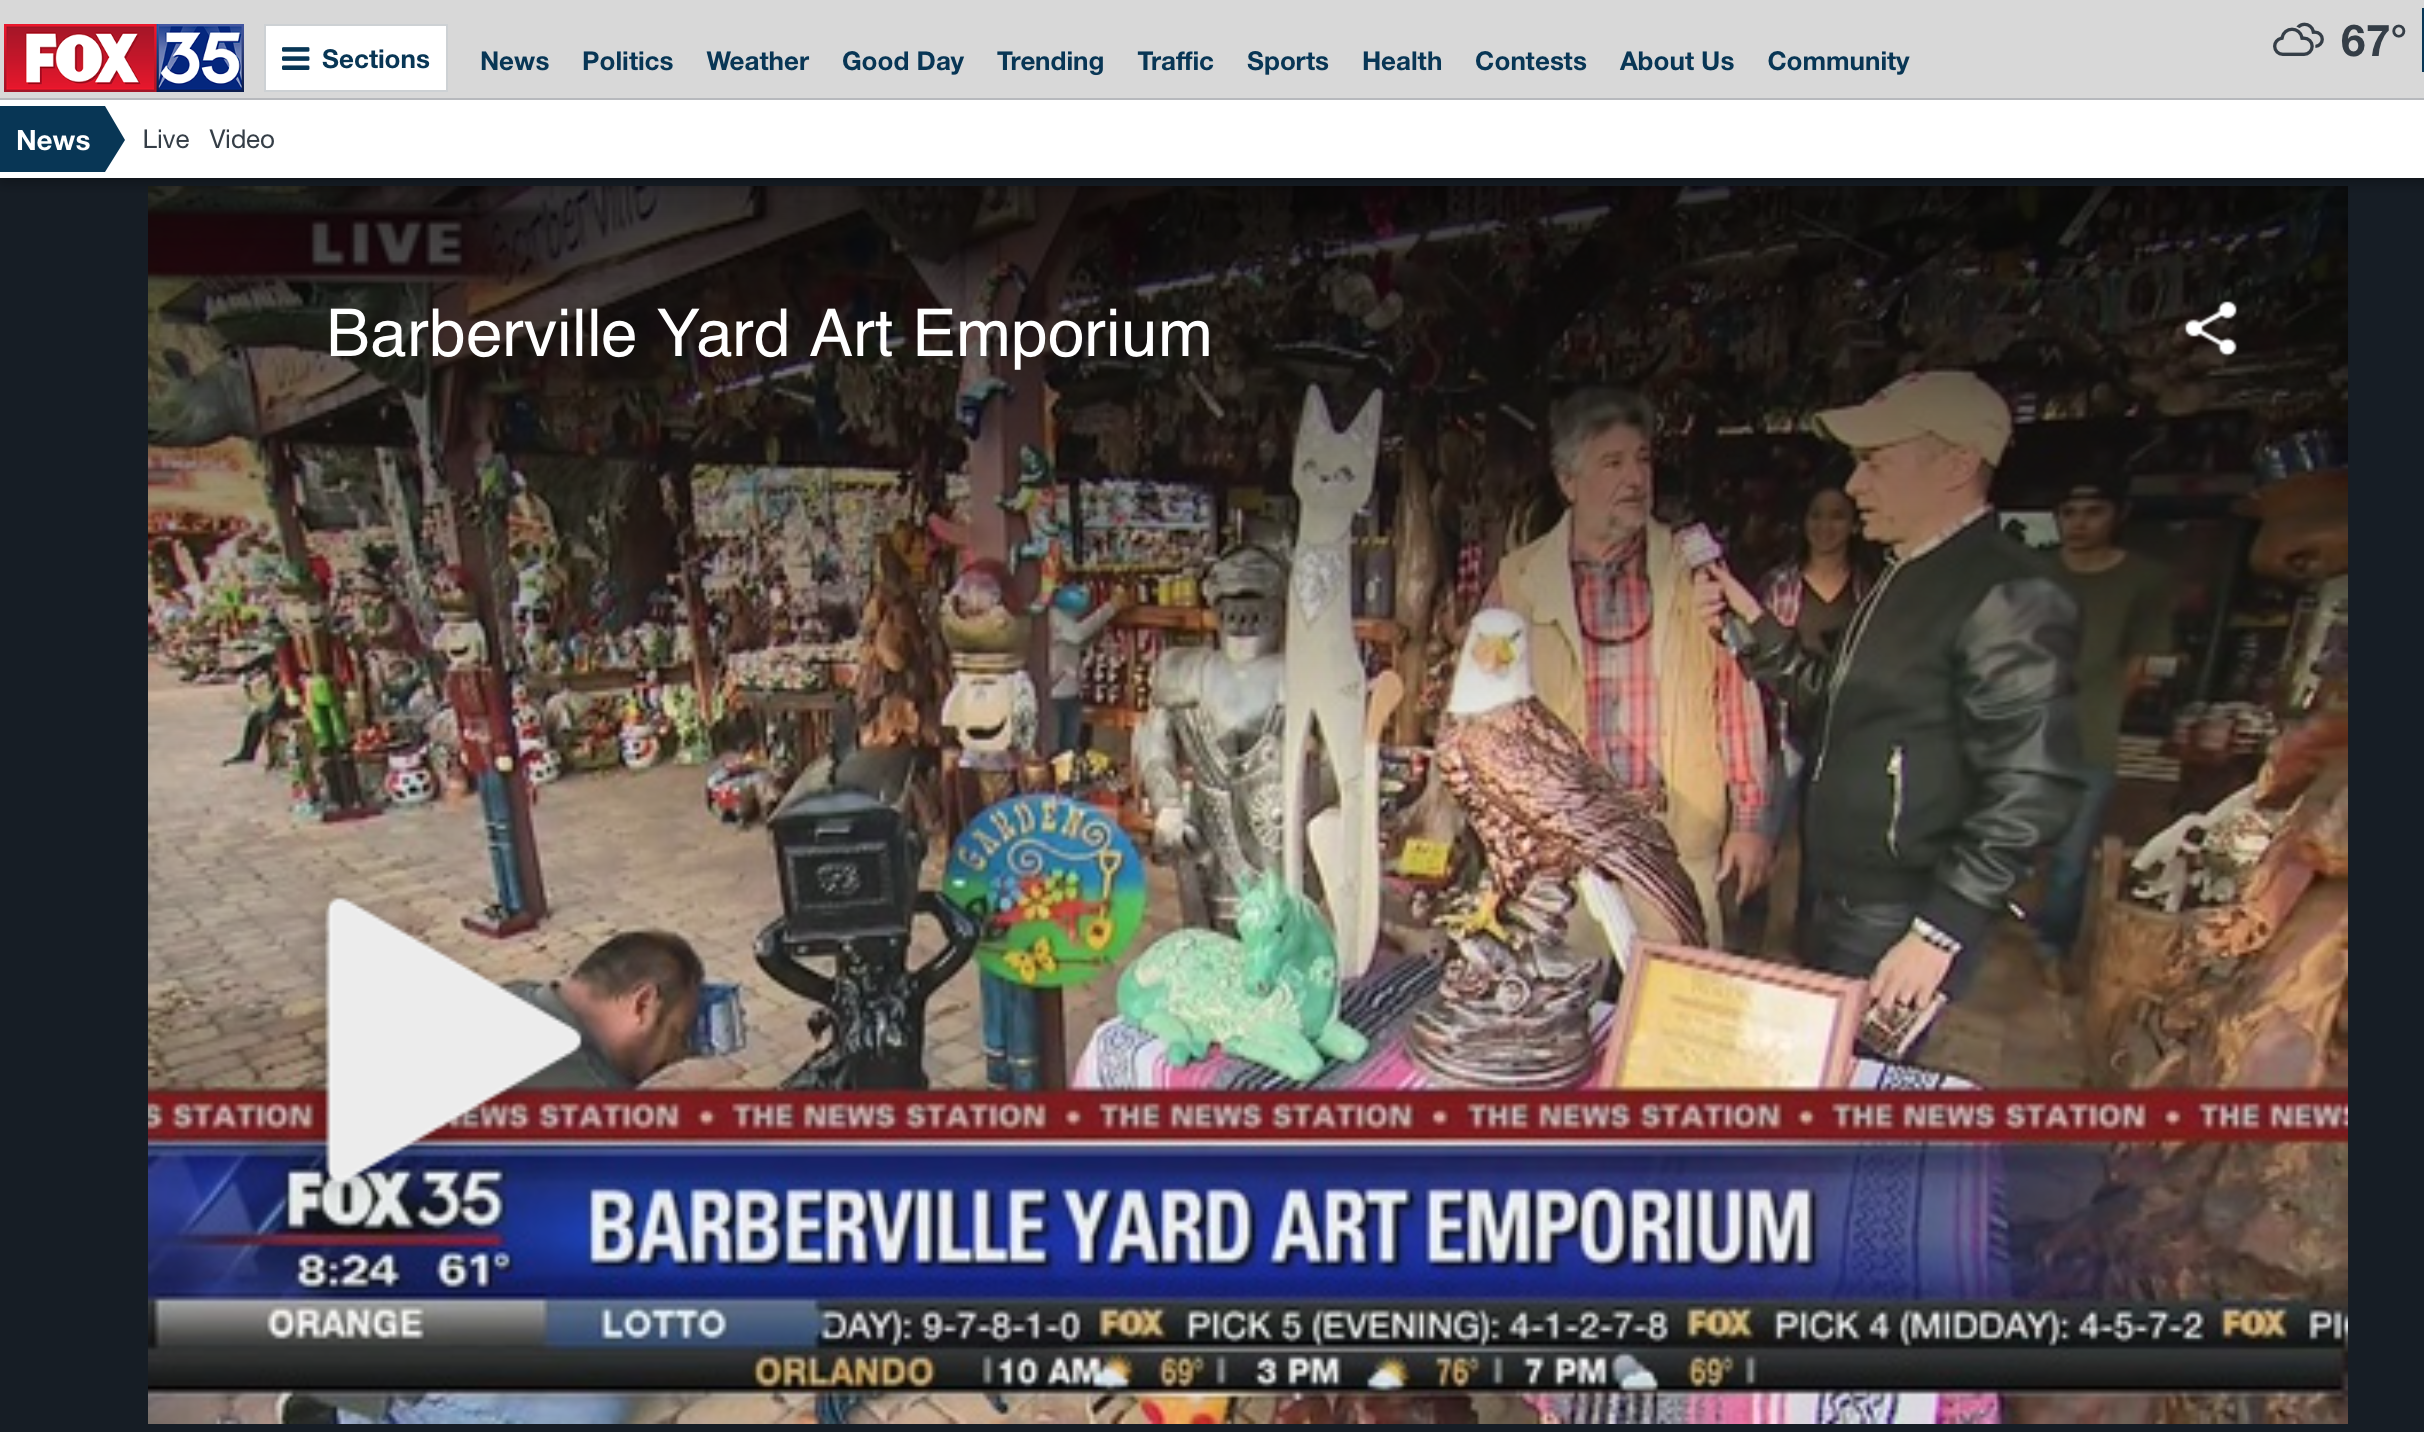 Barberville Yard Art Emporium on Fox News Orlando